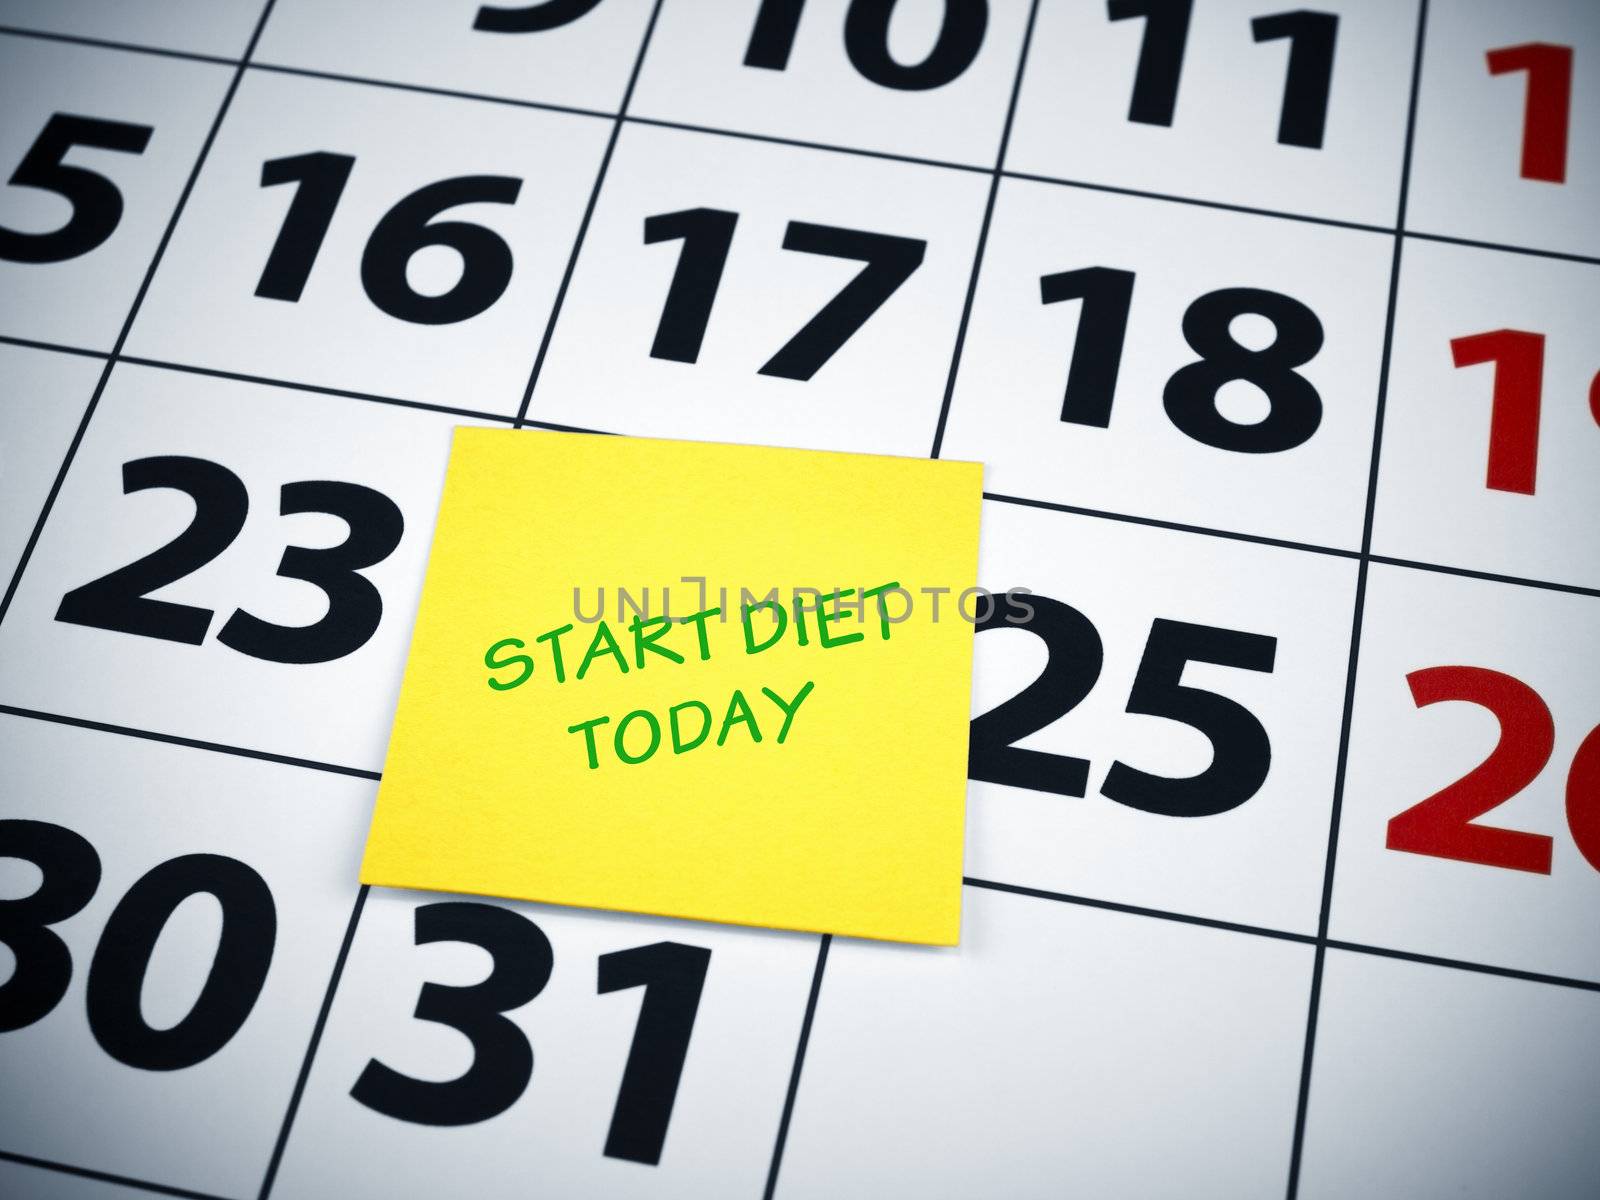 Start diet today written on a sticky note on a calendar.